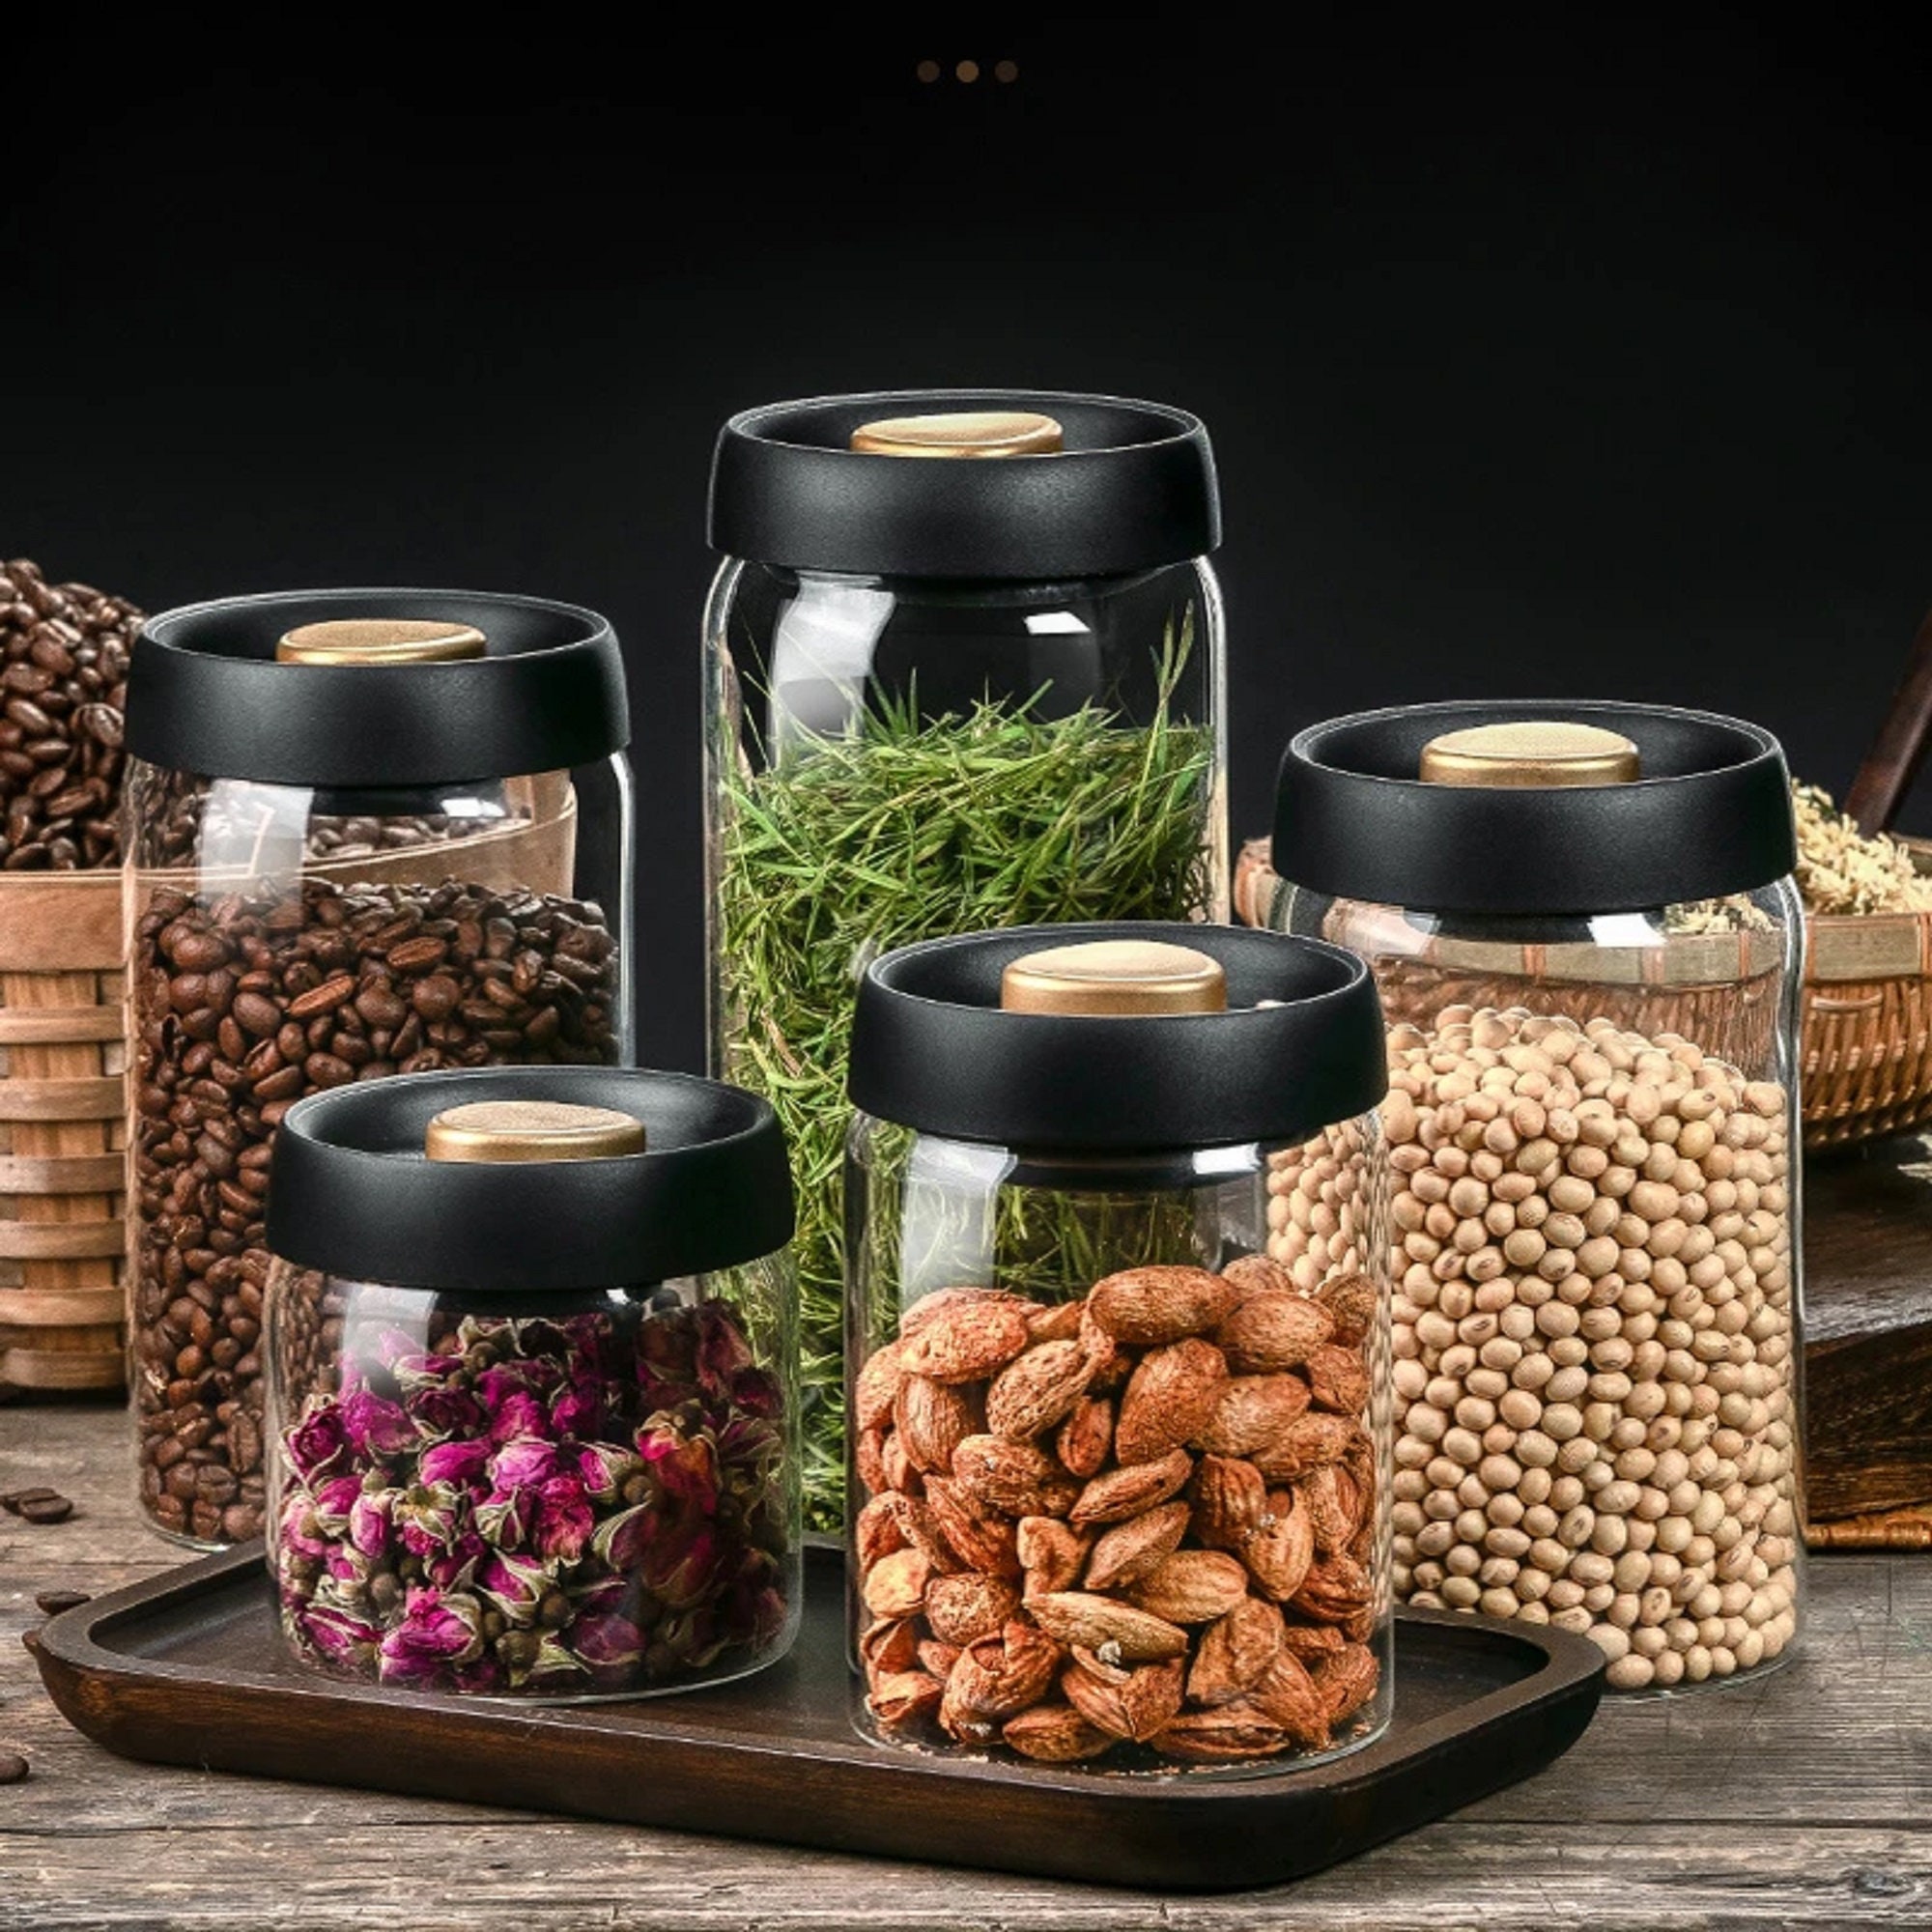 Glass Jar with Bamboo Lids Urban Green, Glass Airtight food